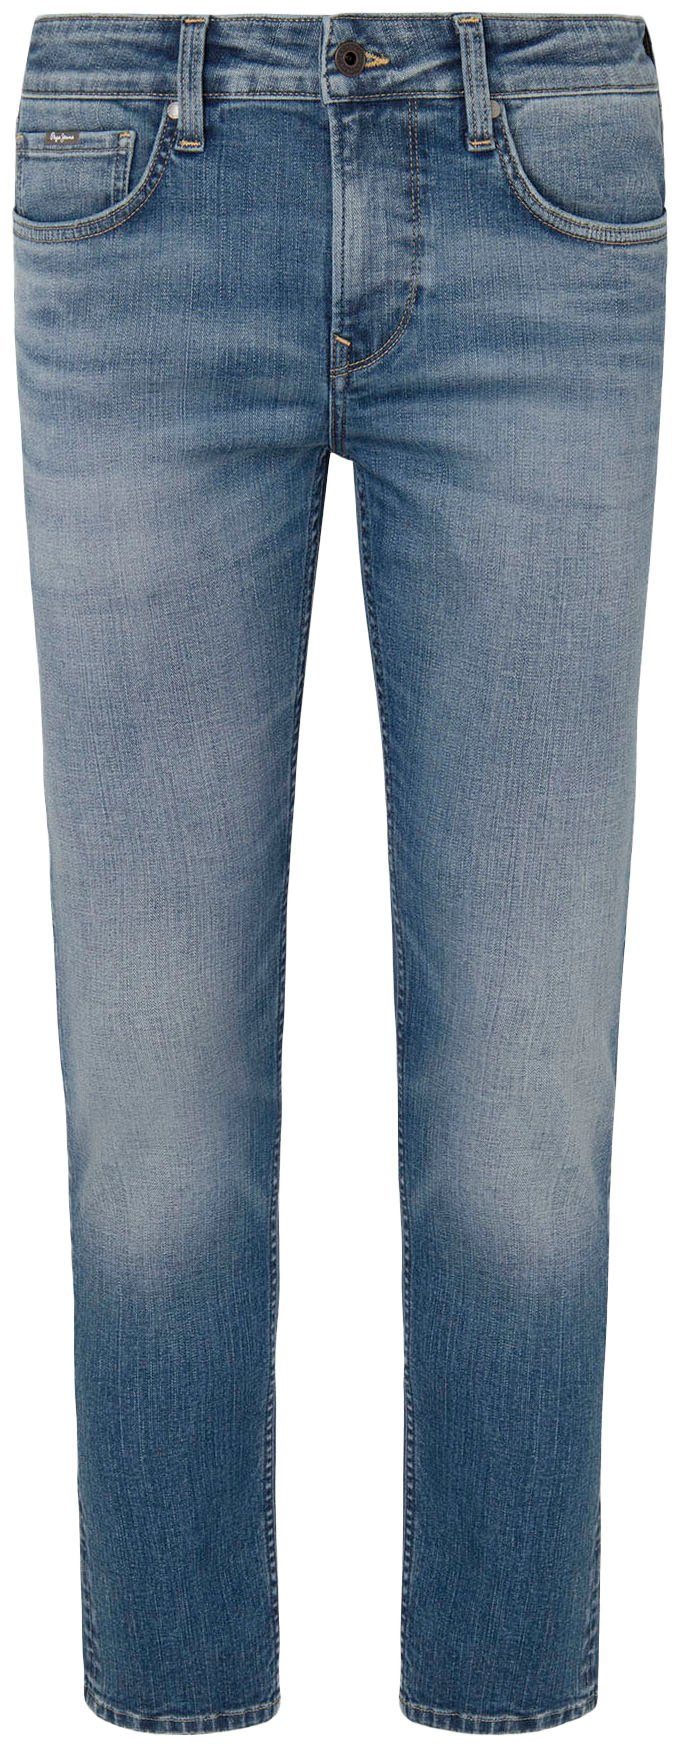 Pepe Jeans 5-pocket jeans